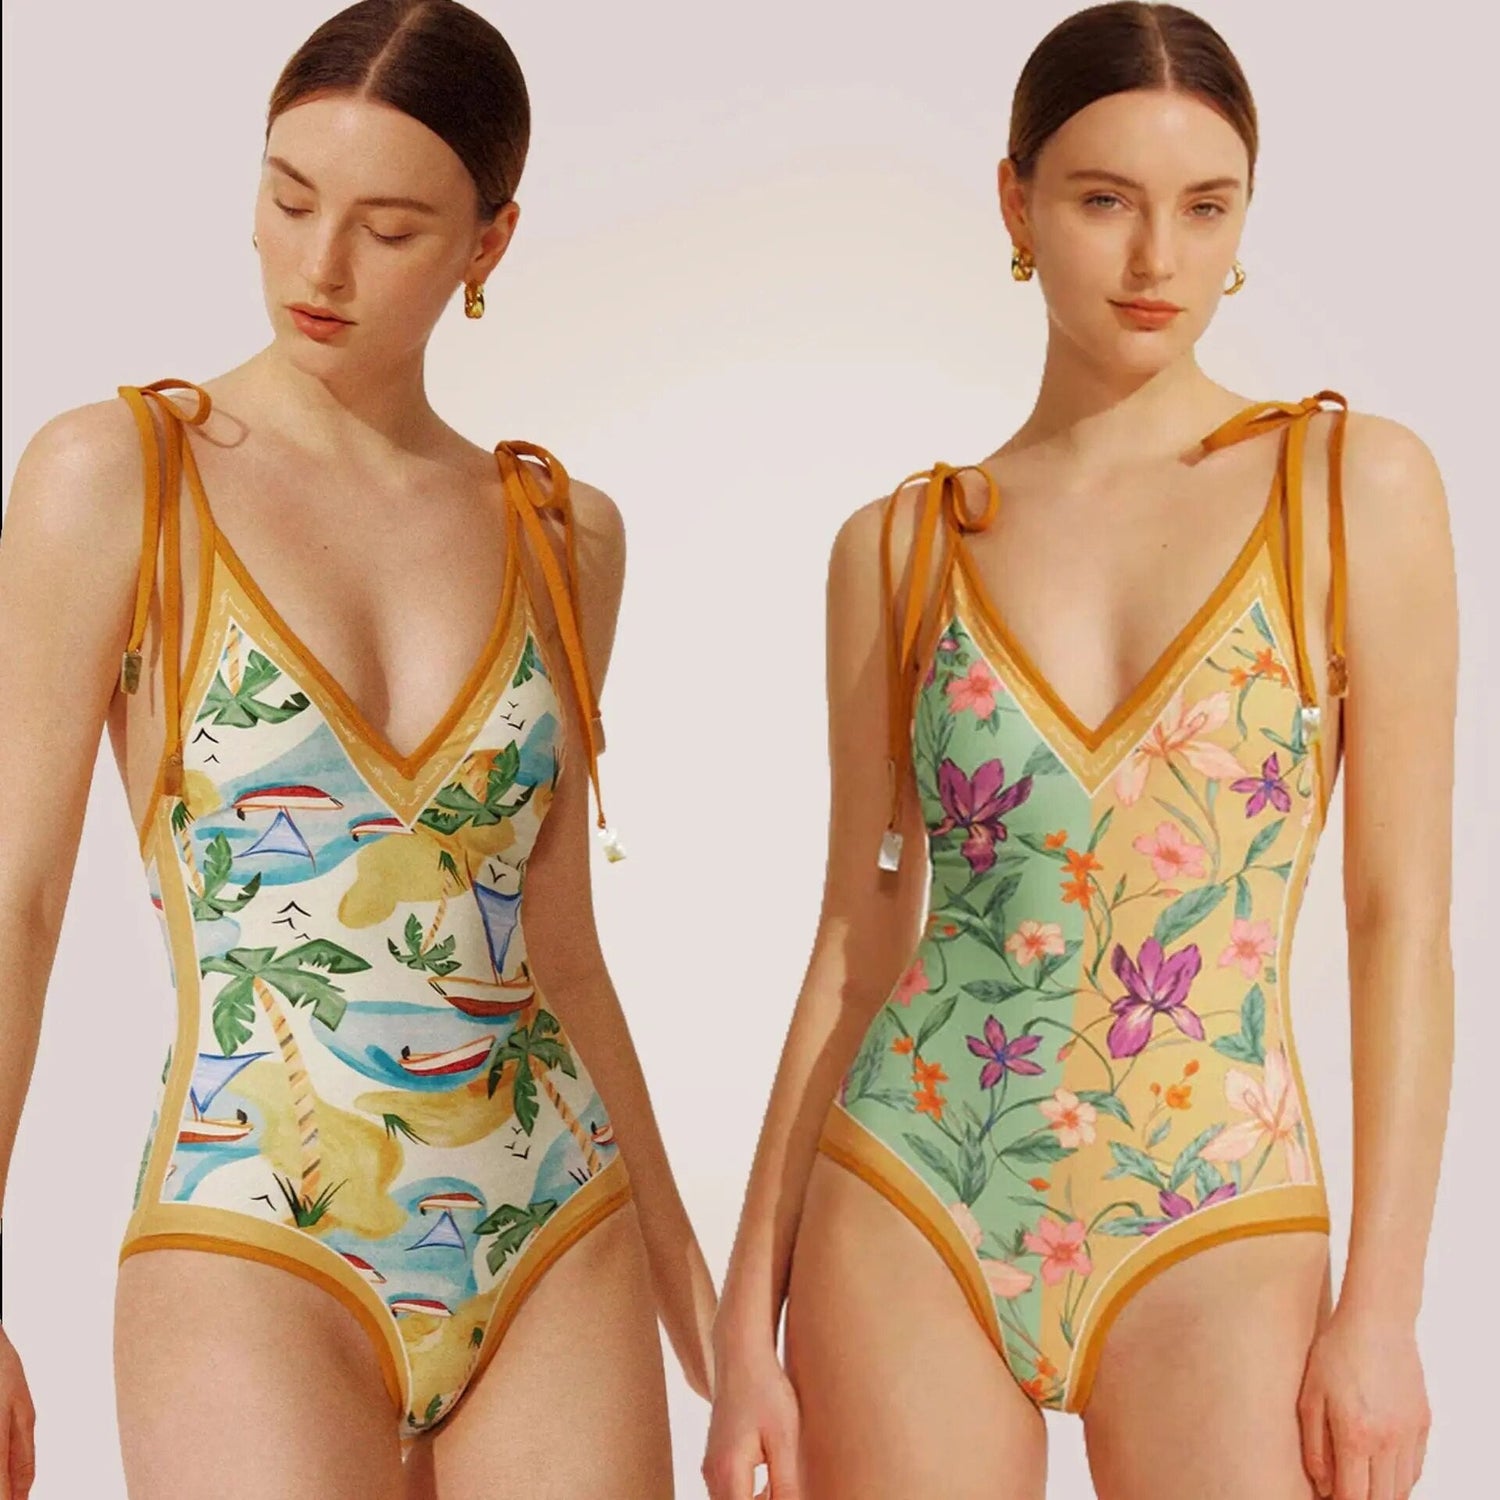 Double-sided Wear Retro French Suspender Swimwear One-piece Swimsuit AB Pattern Floral Bikini Monokini Youth Beach Bathing SuitsK&F